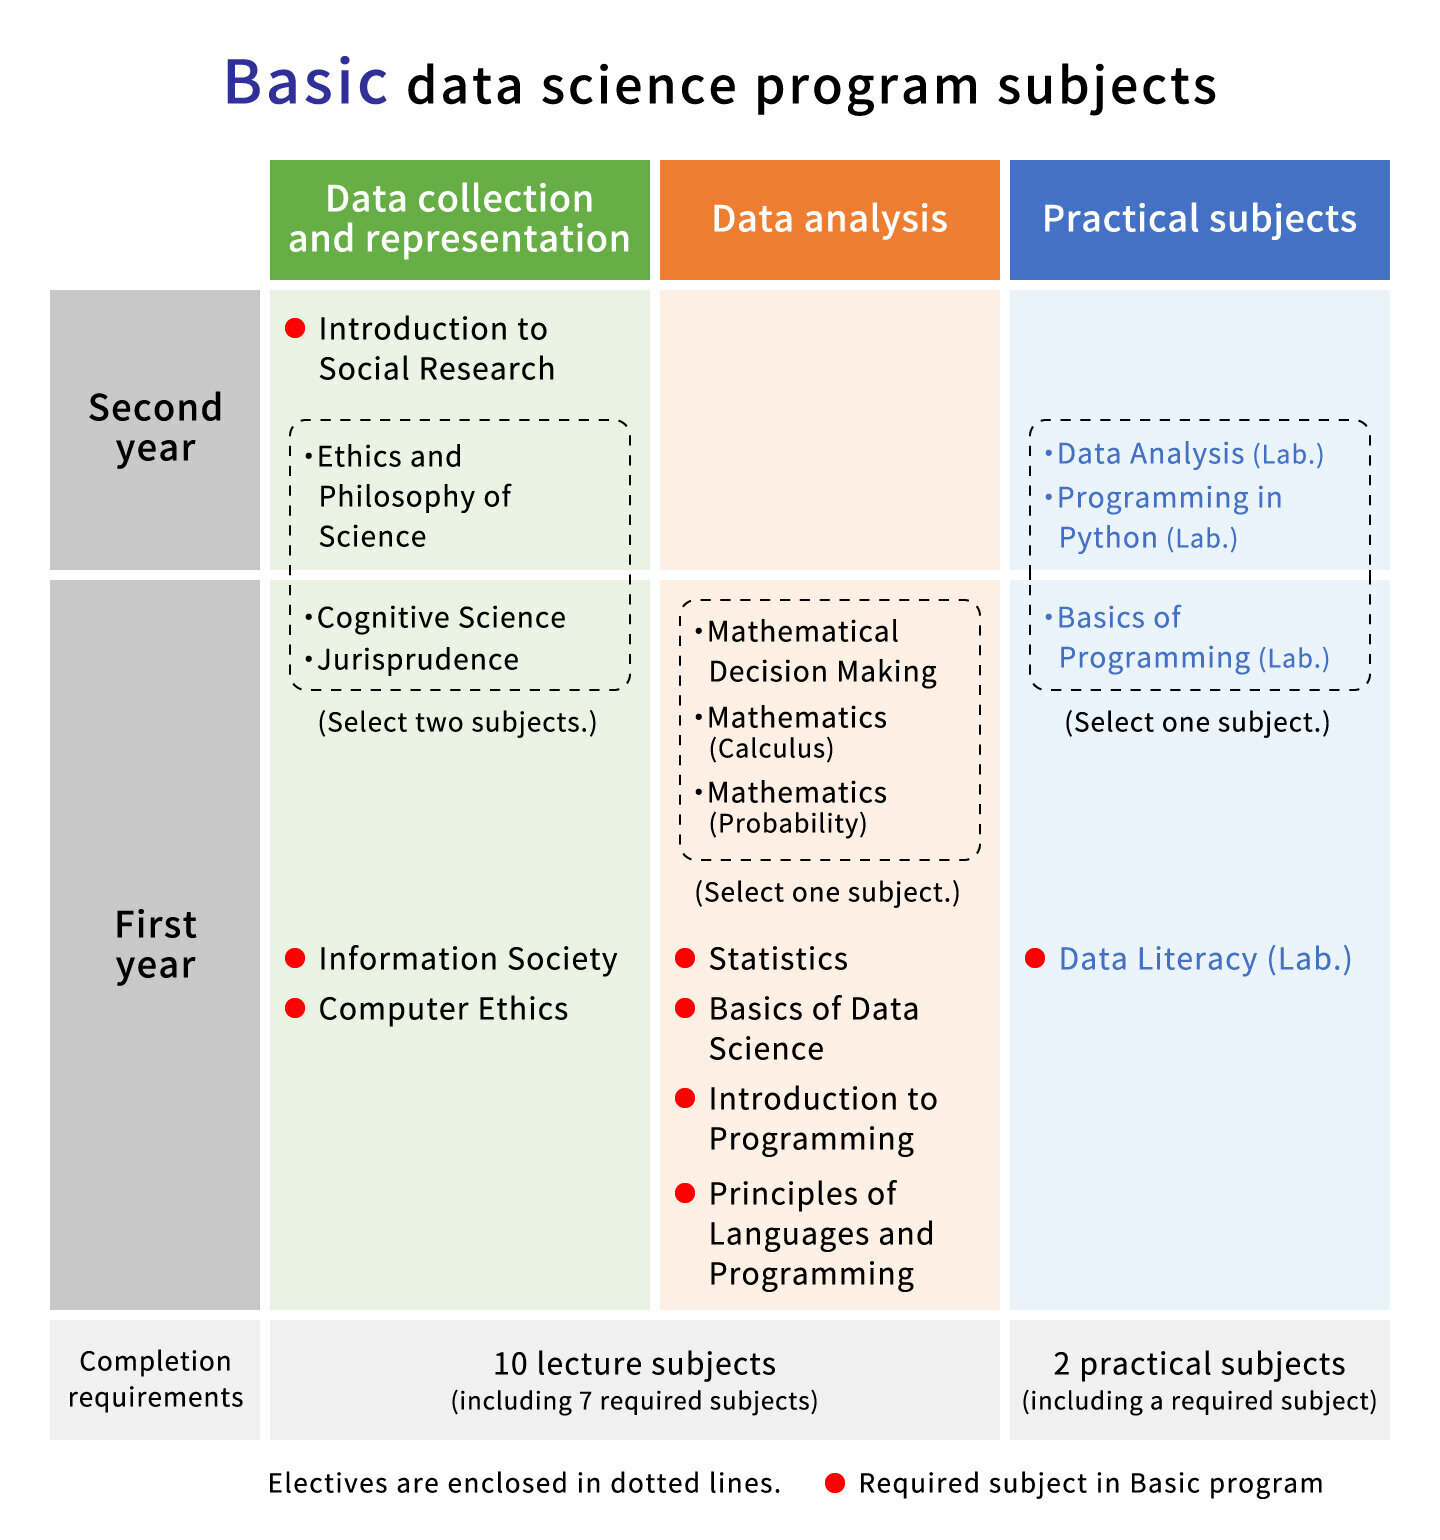 Basic data science program subjects